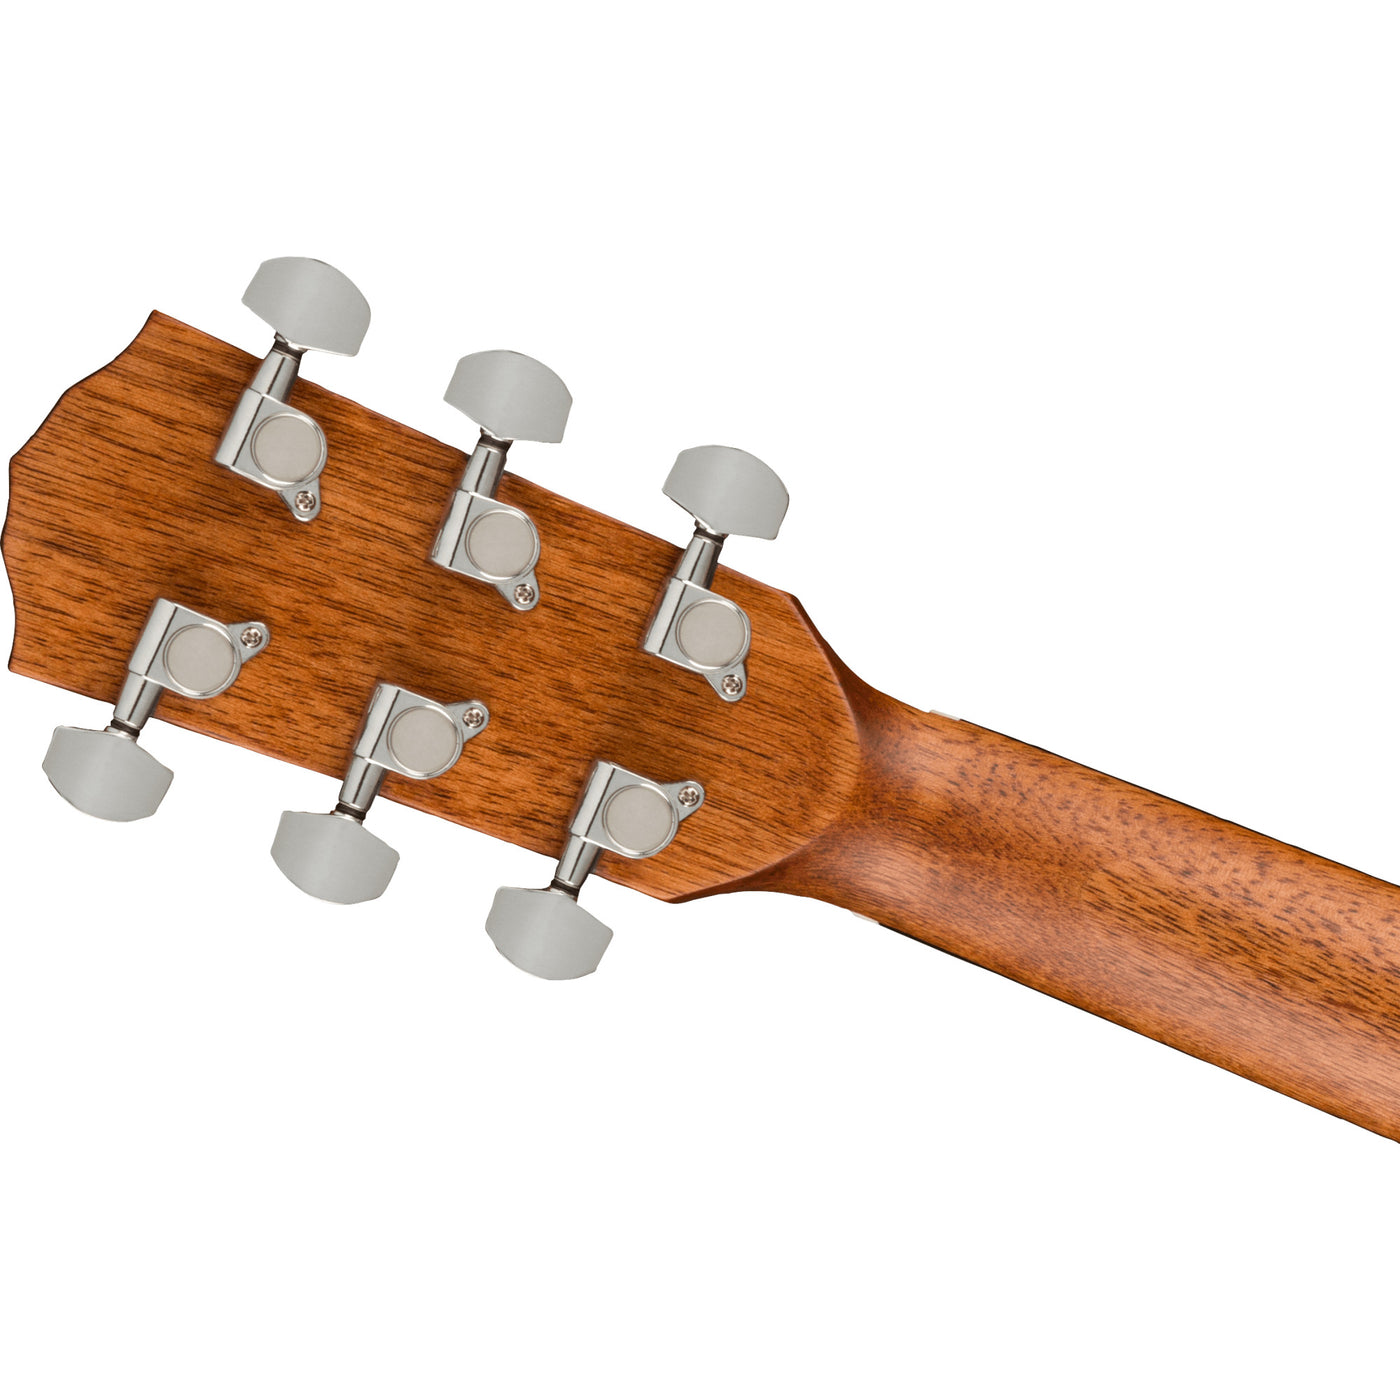 Fender FA-15 3/4 Steel Acoustic Guitar, Moonlight Burst (0971170135)